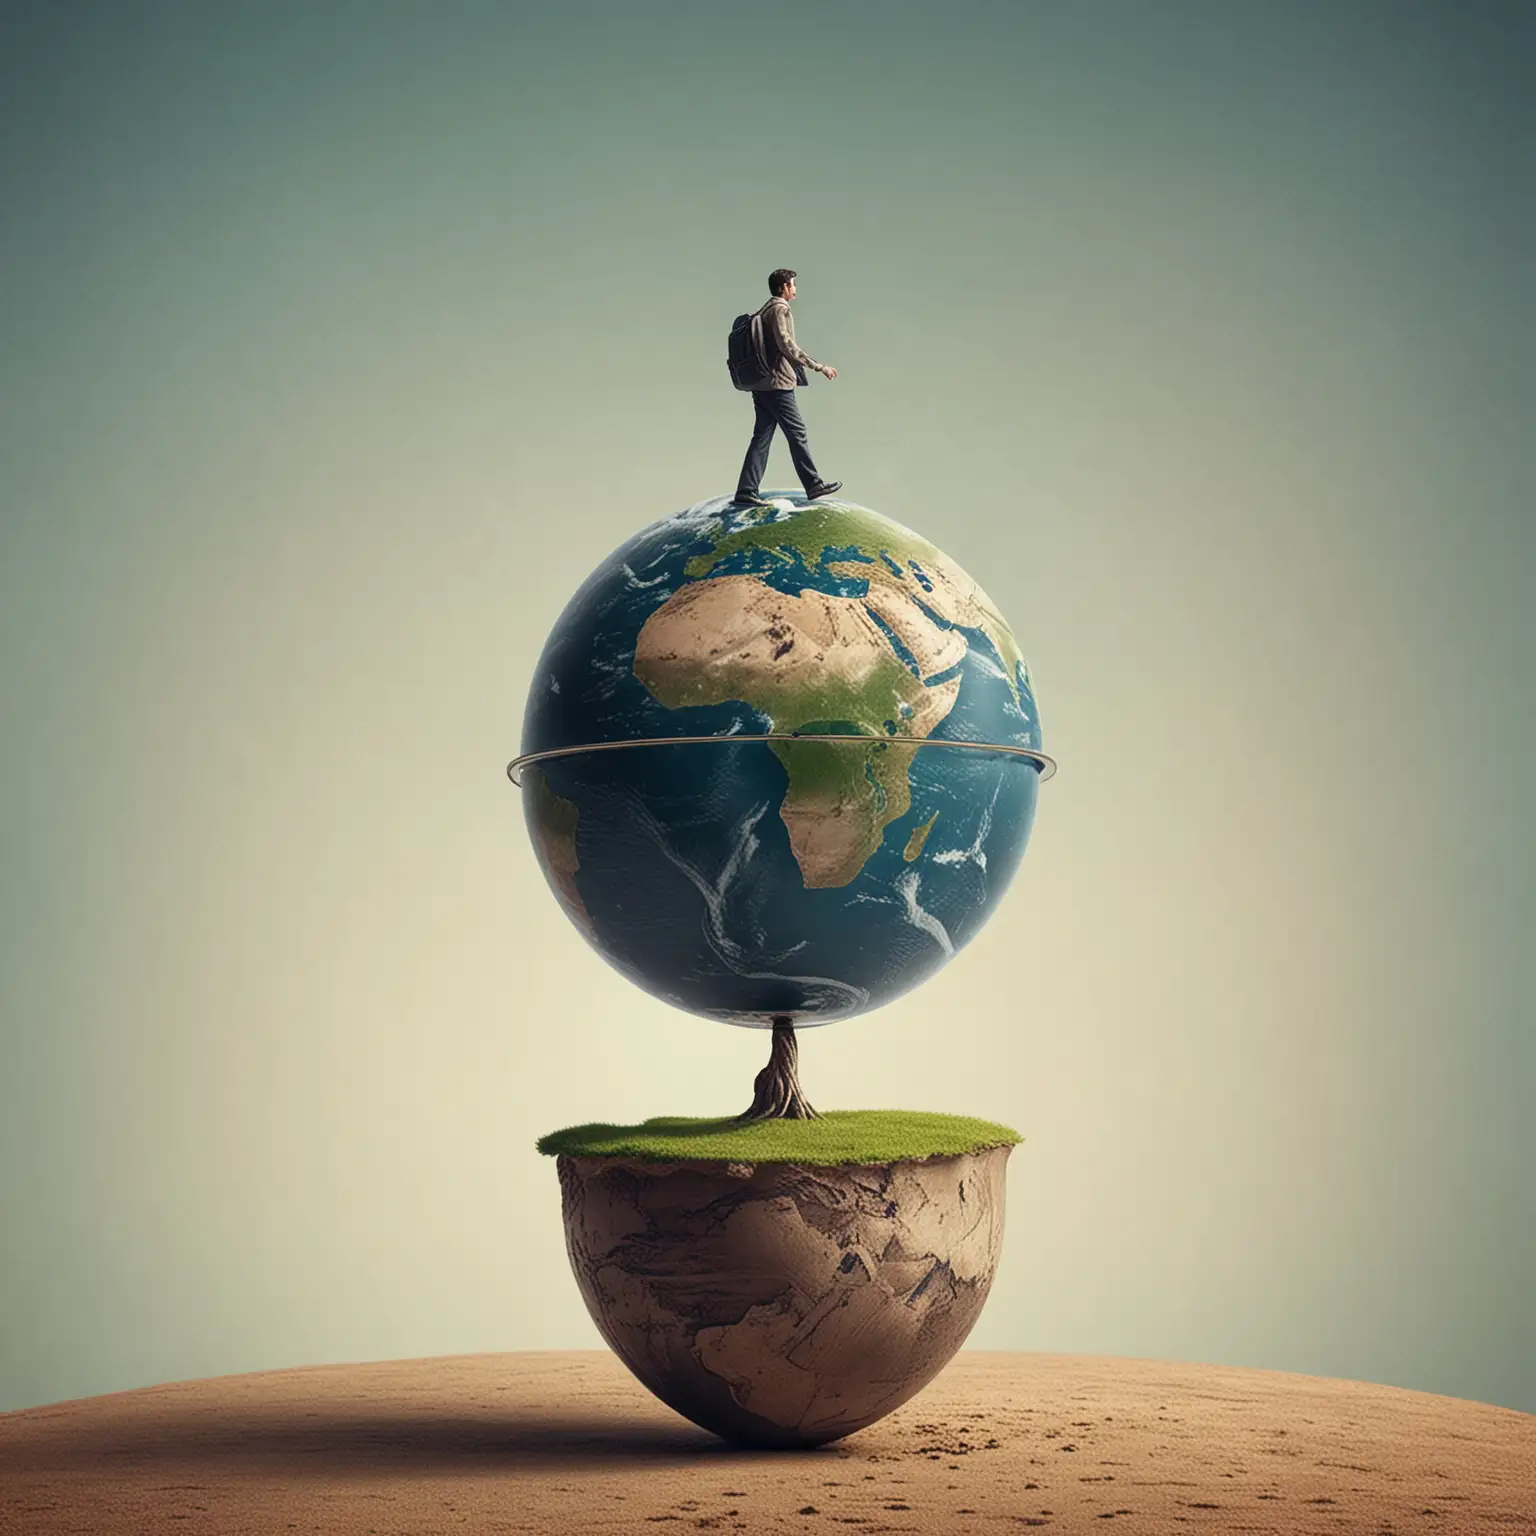 Man Walking on Top of Earth Globe